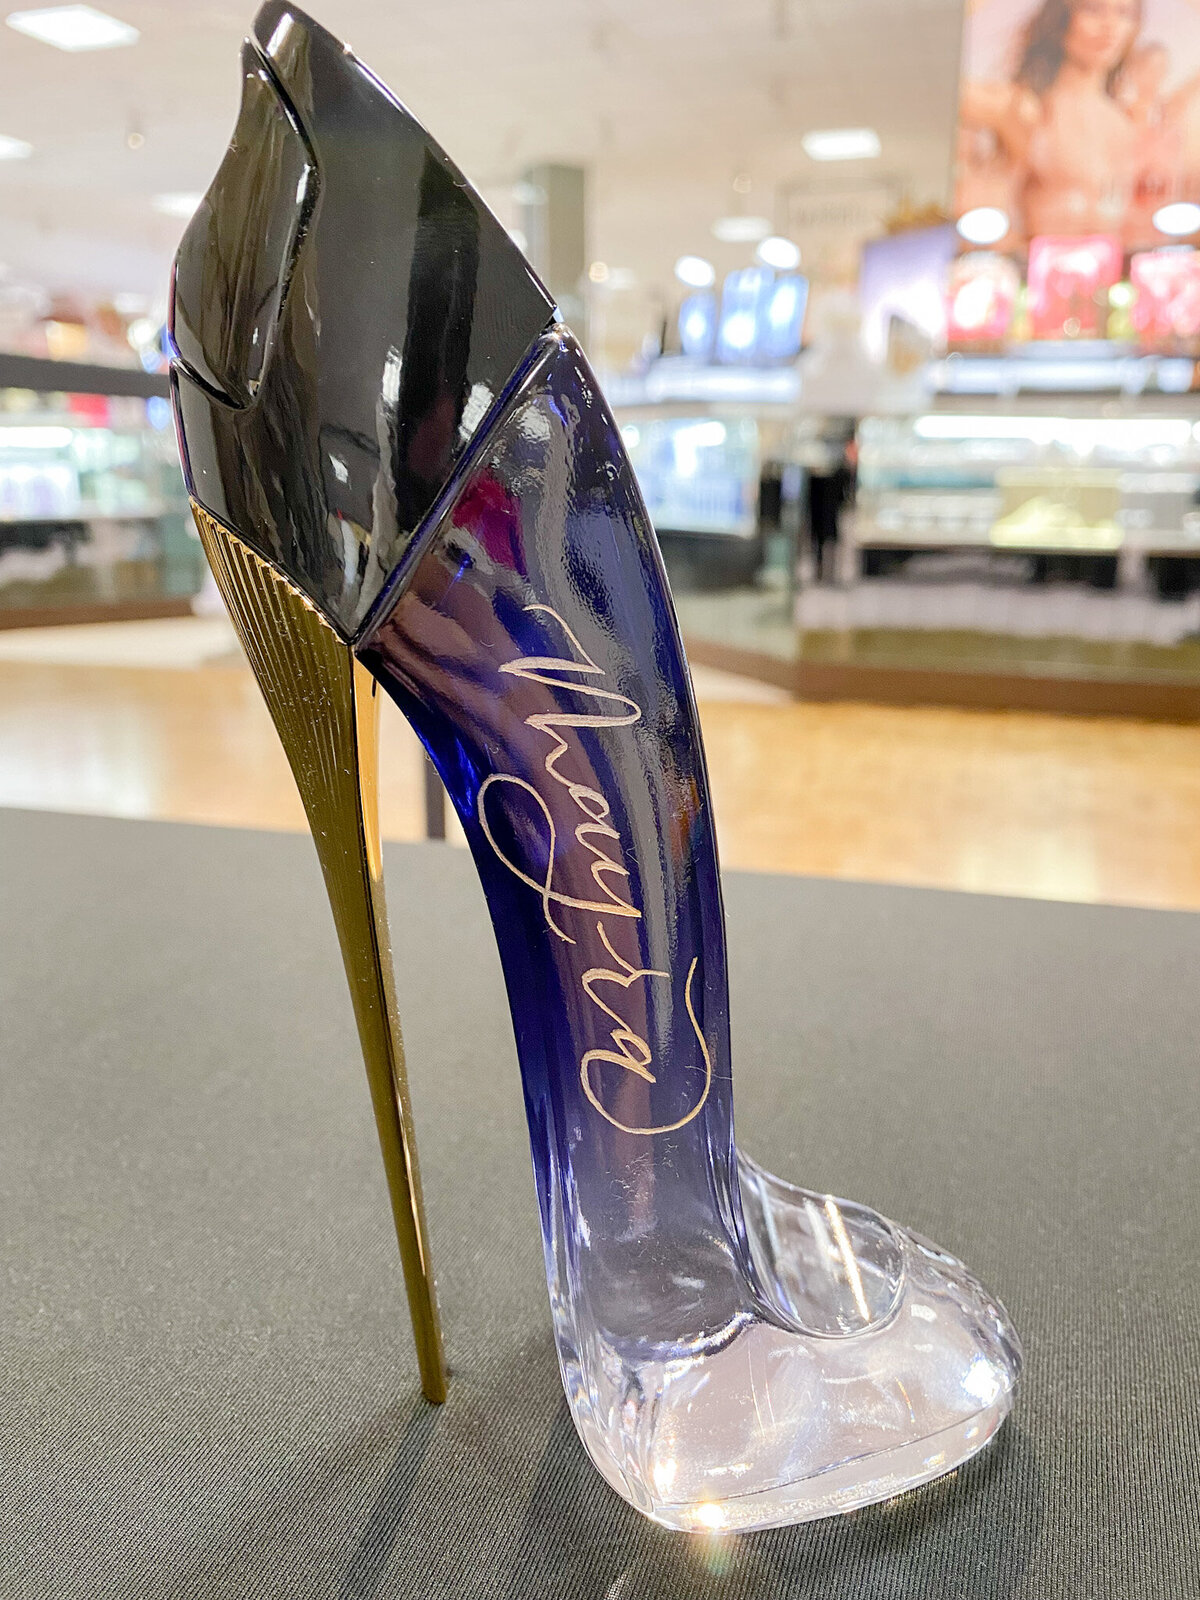 Dillard's Brand Activation Carolina Herrera Good Girl Luxury Perfume Engraving Jenny Blaschke